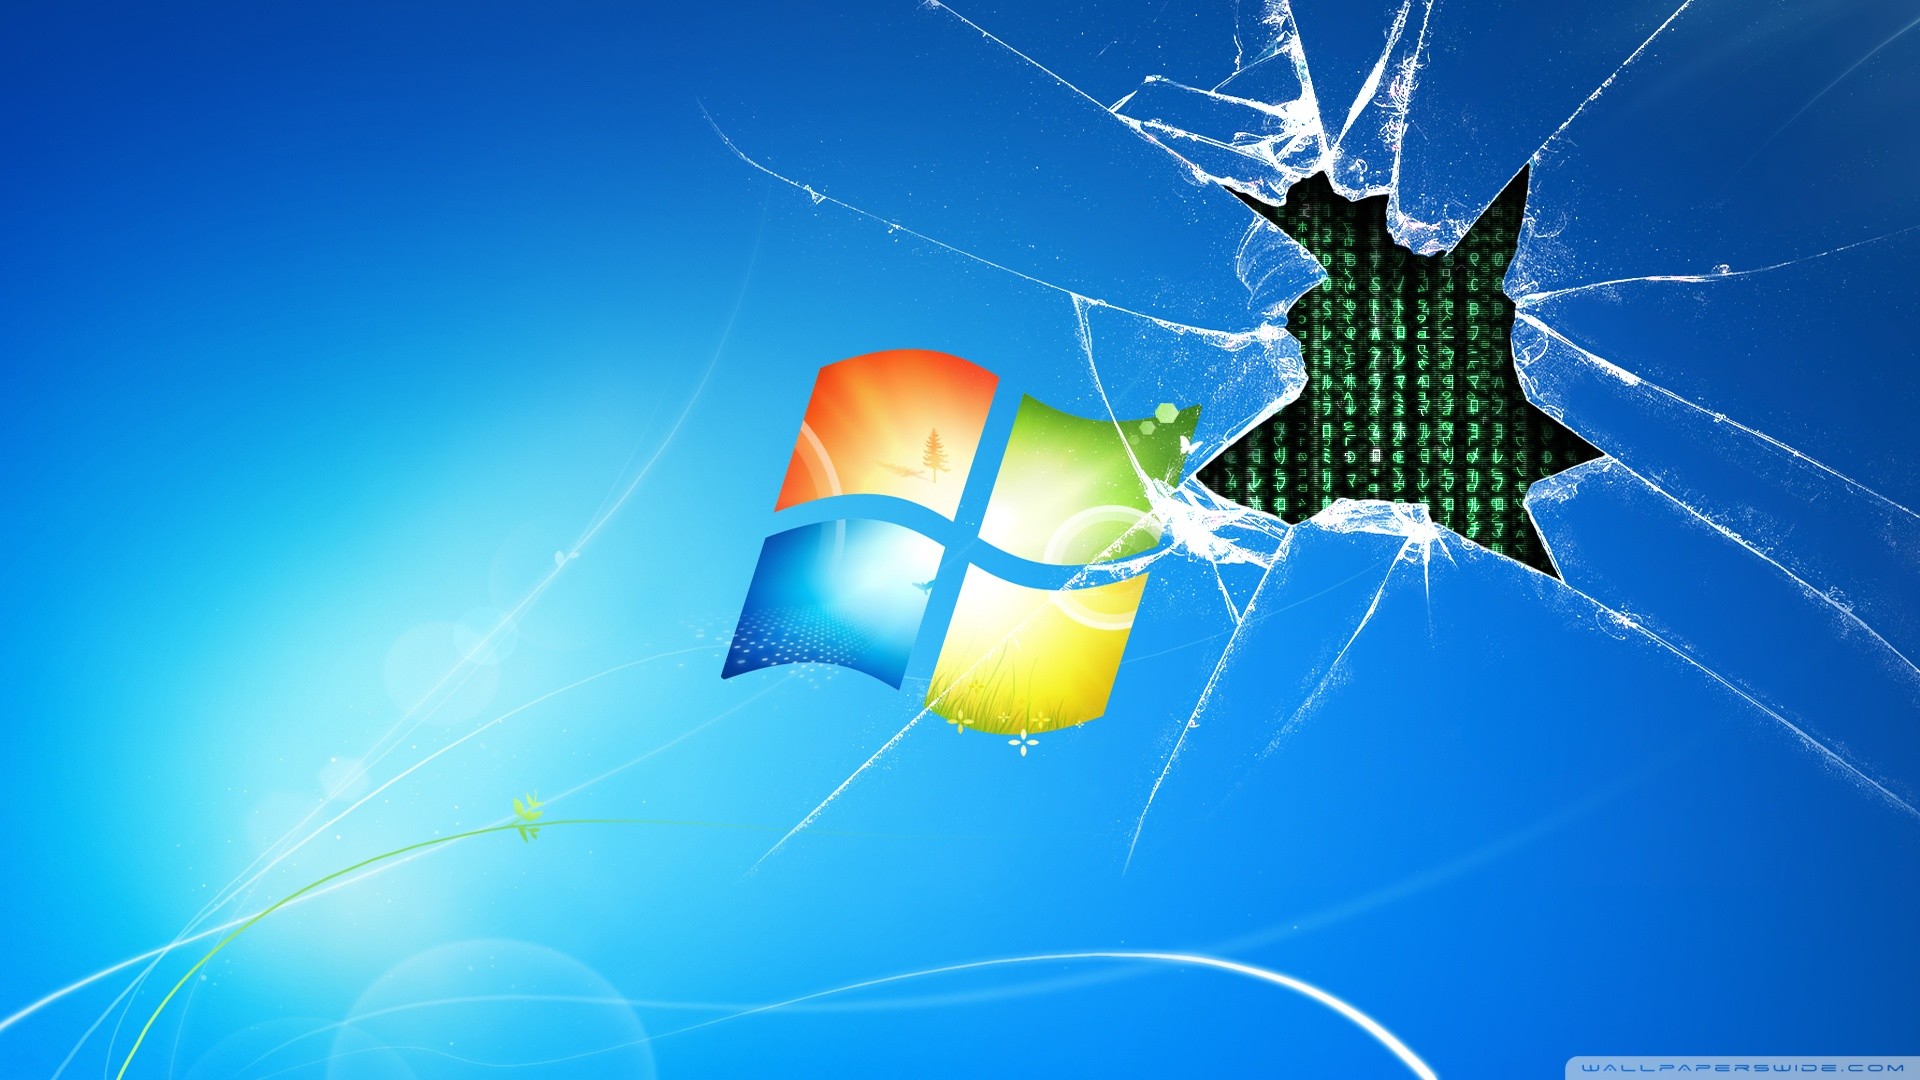 Windows 7 runs on the Matrix Wallpaper Reviews, news, tips